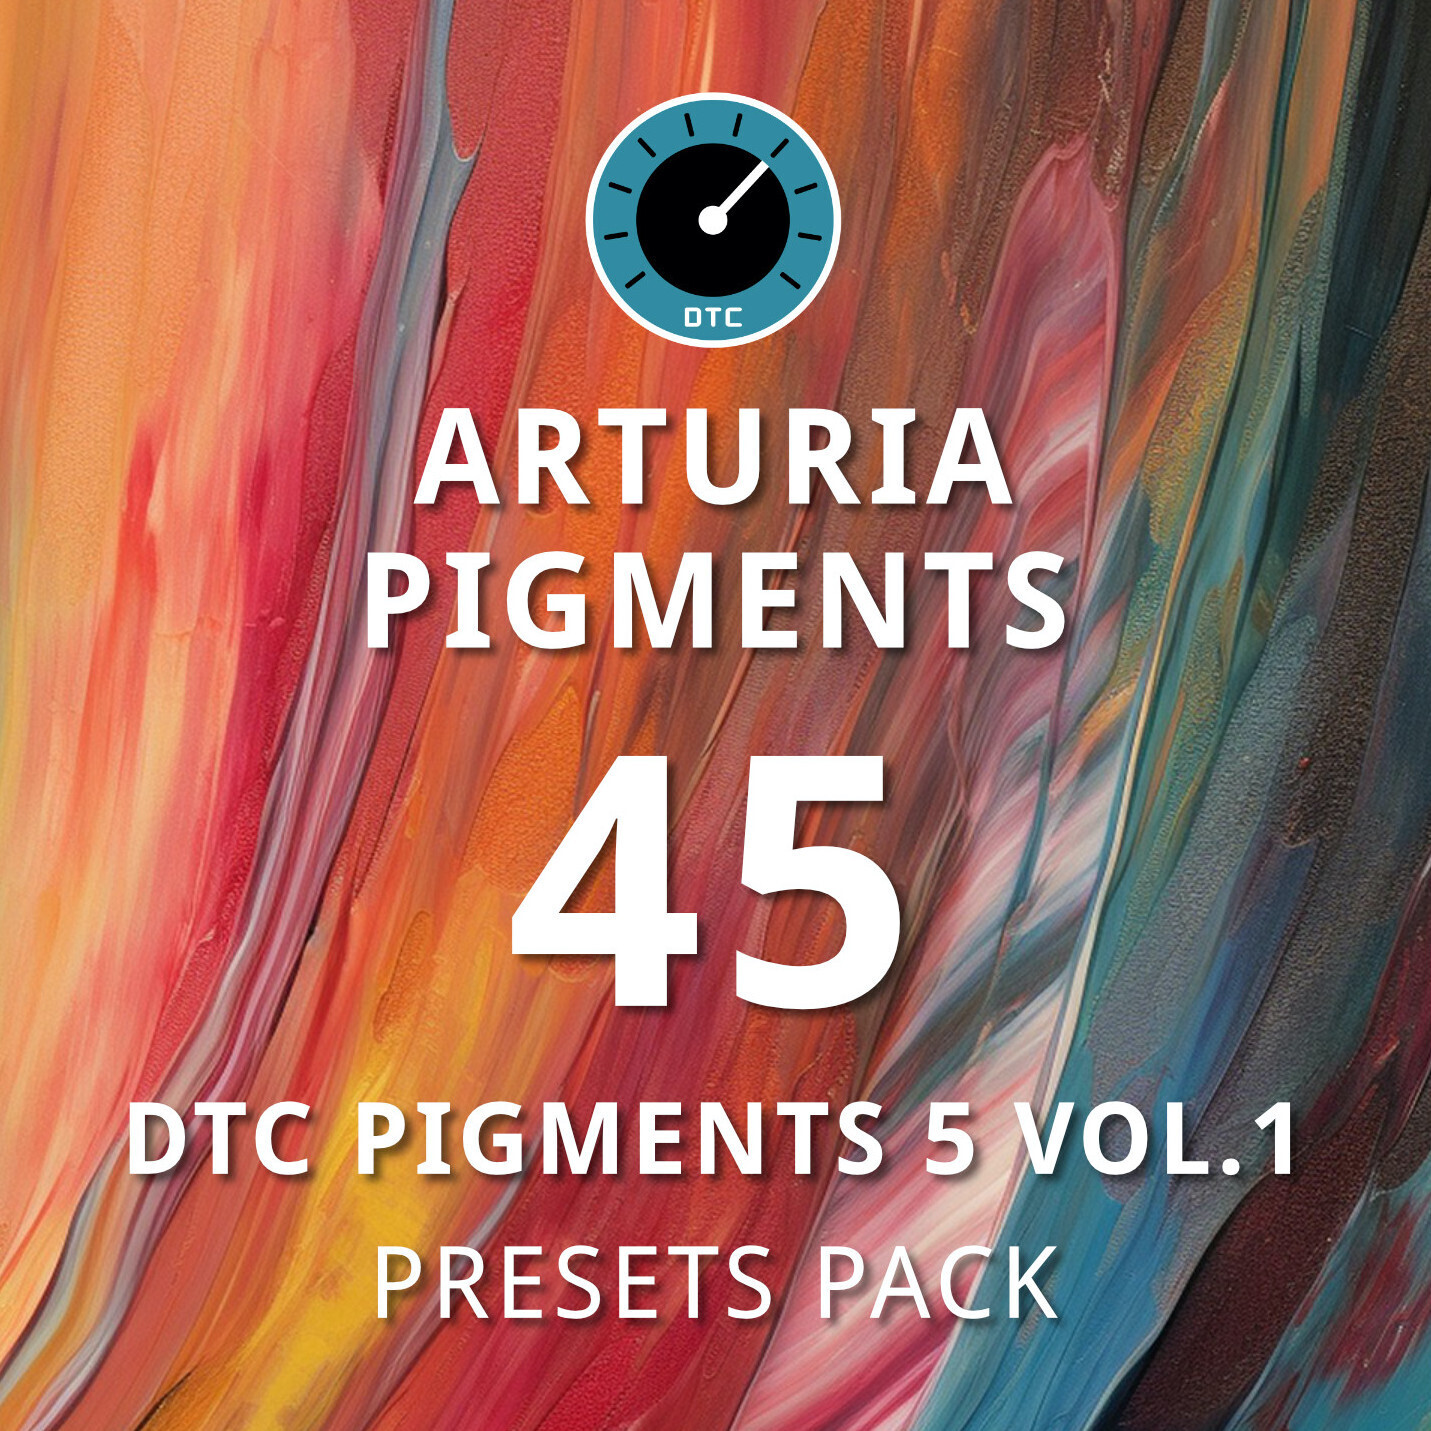 Arturia - DTC Pigments 5 Vol.1 - 45 Preset Pack